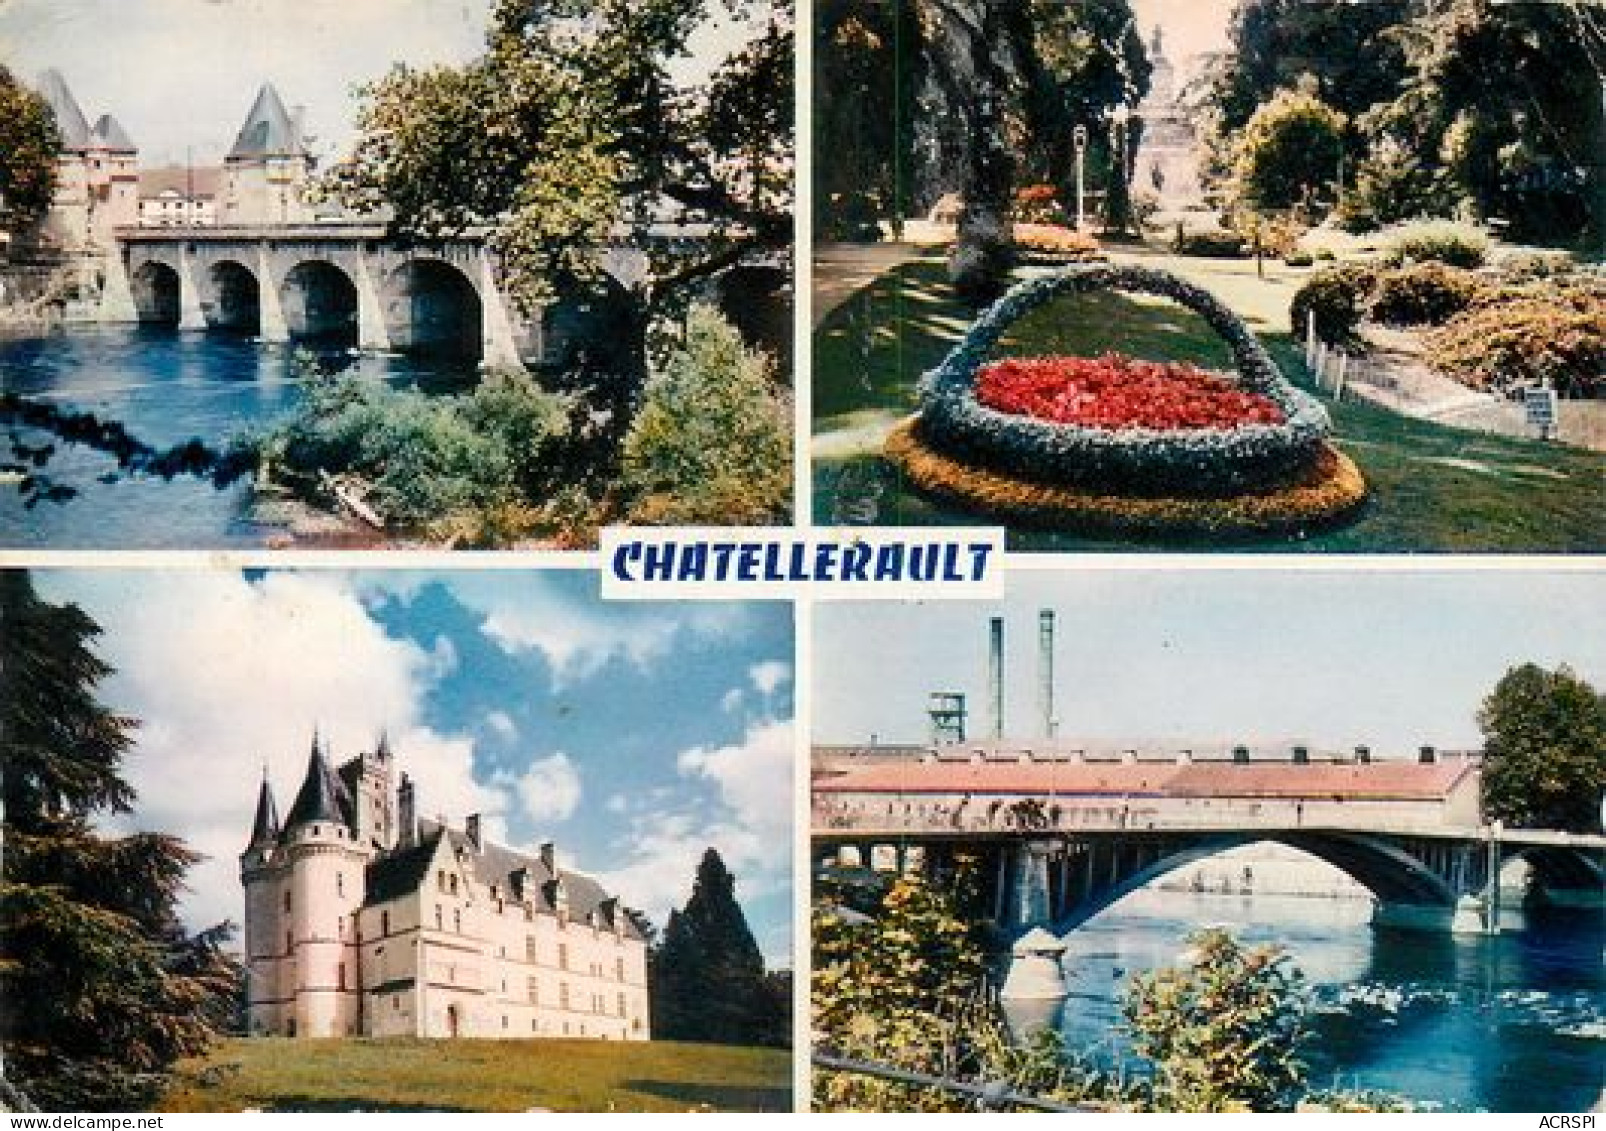  CHATELLERAULT  4 Vues De La Ville   4   (scan Recto-verso)MA2166Ter - Chatellerault